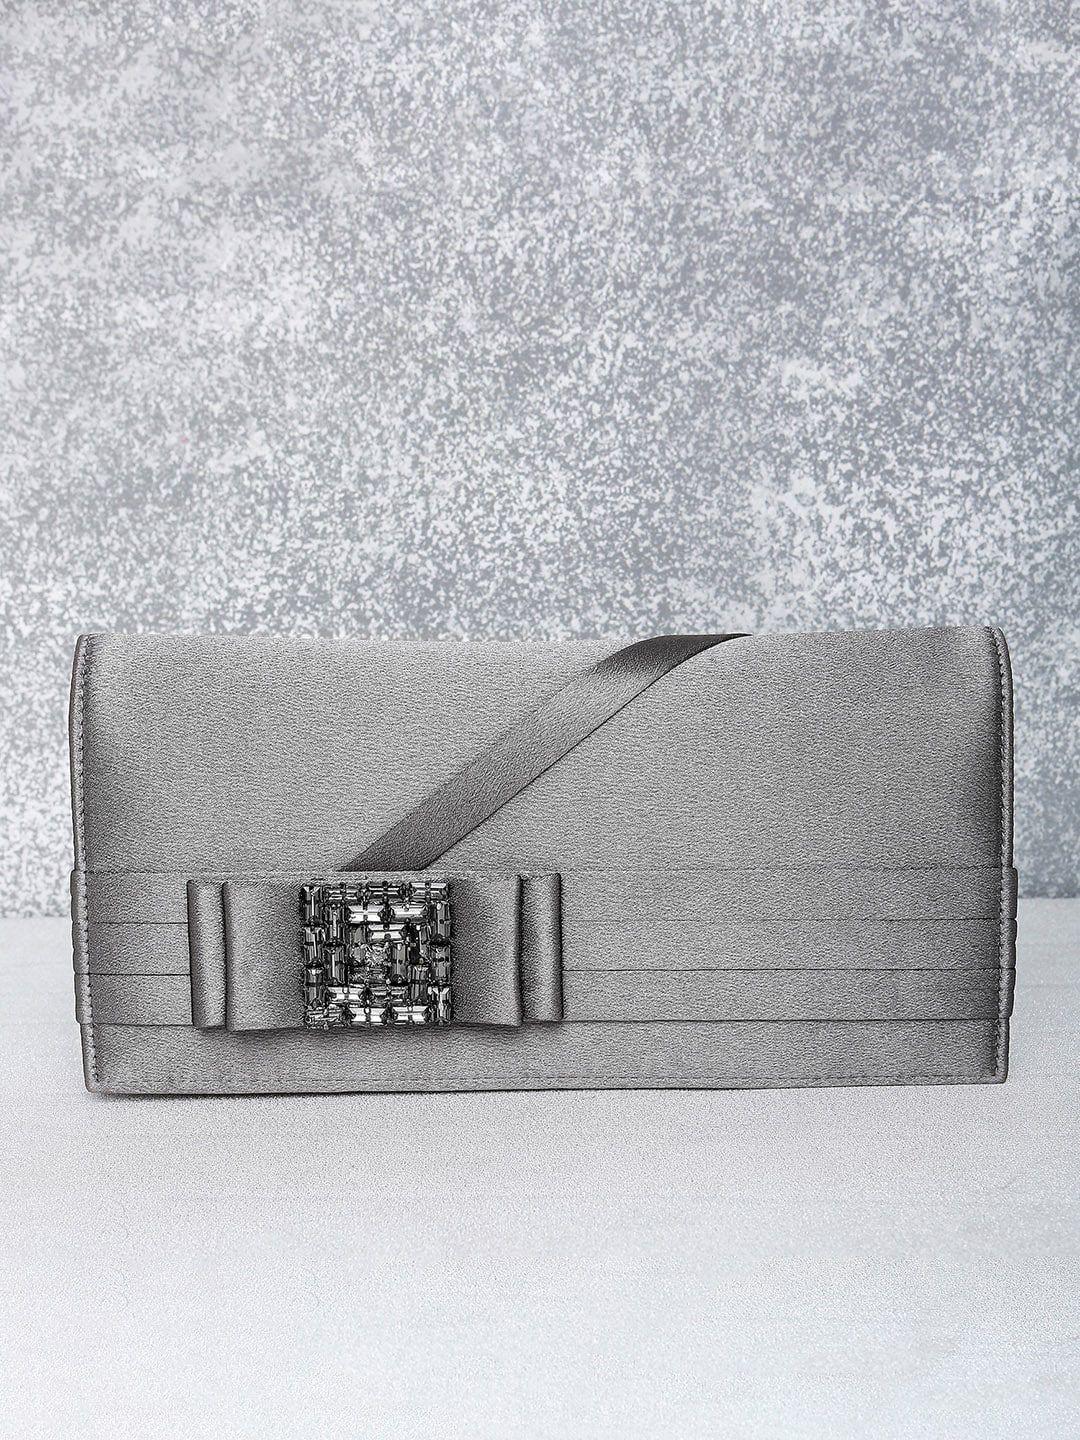 peora grey clutch purses for women handmade evening handbags bridal clutch